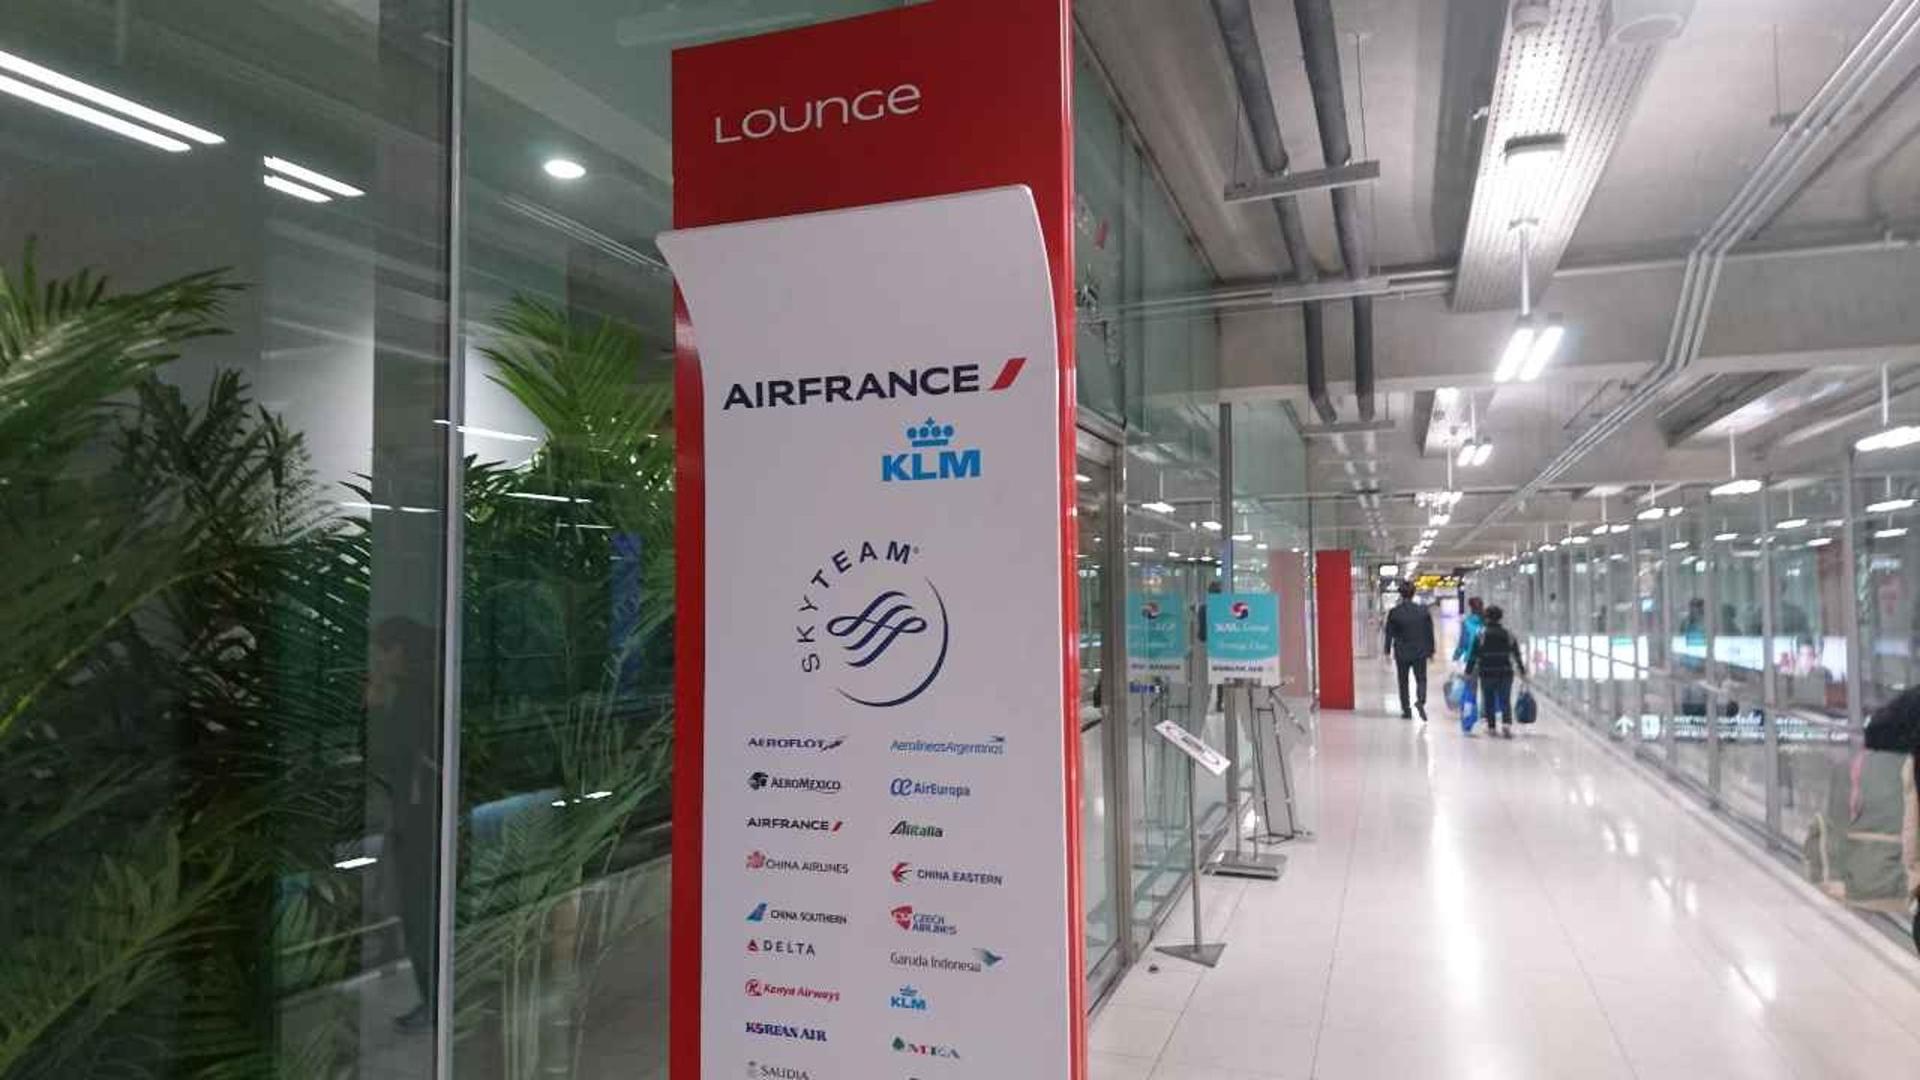 Air France/KLM Lounge image 24 of 28